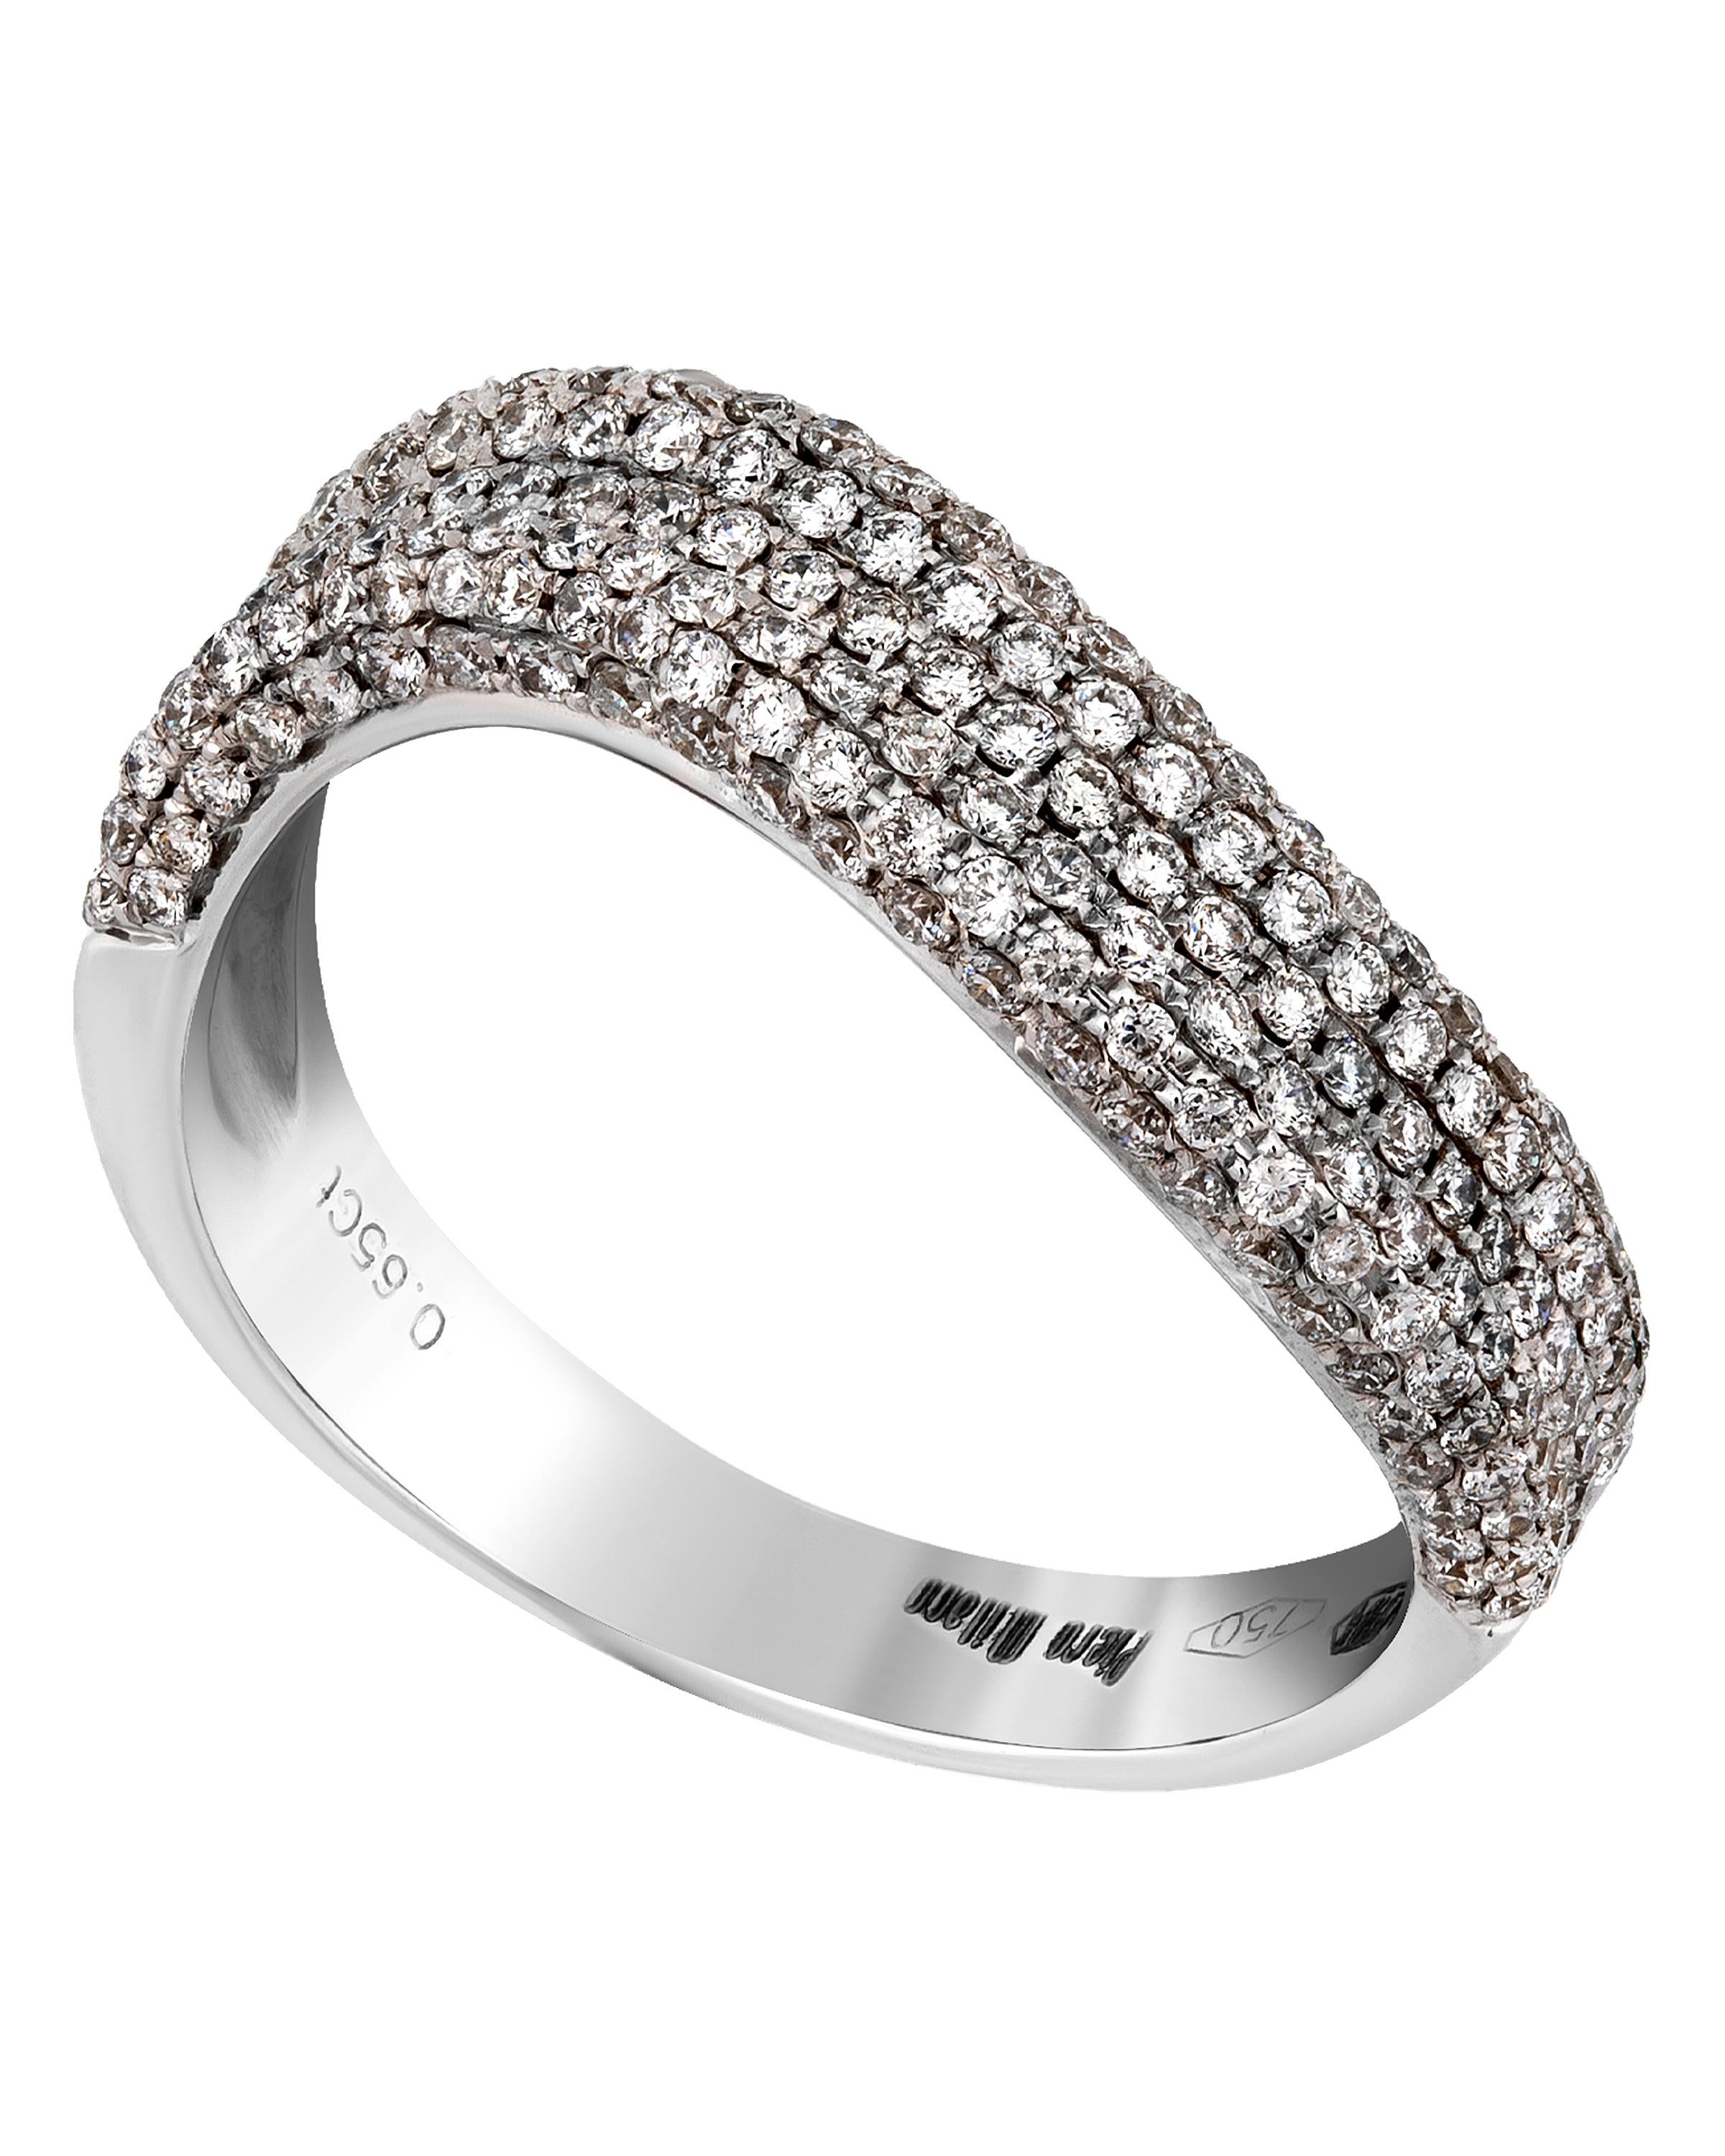 Contemporary Piero Milano 18K White Gold Diamond Ring Sz 6.25 For Sale